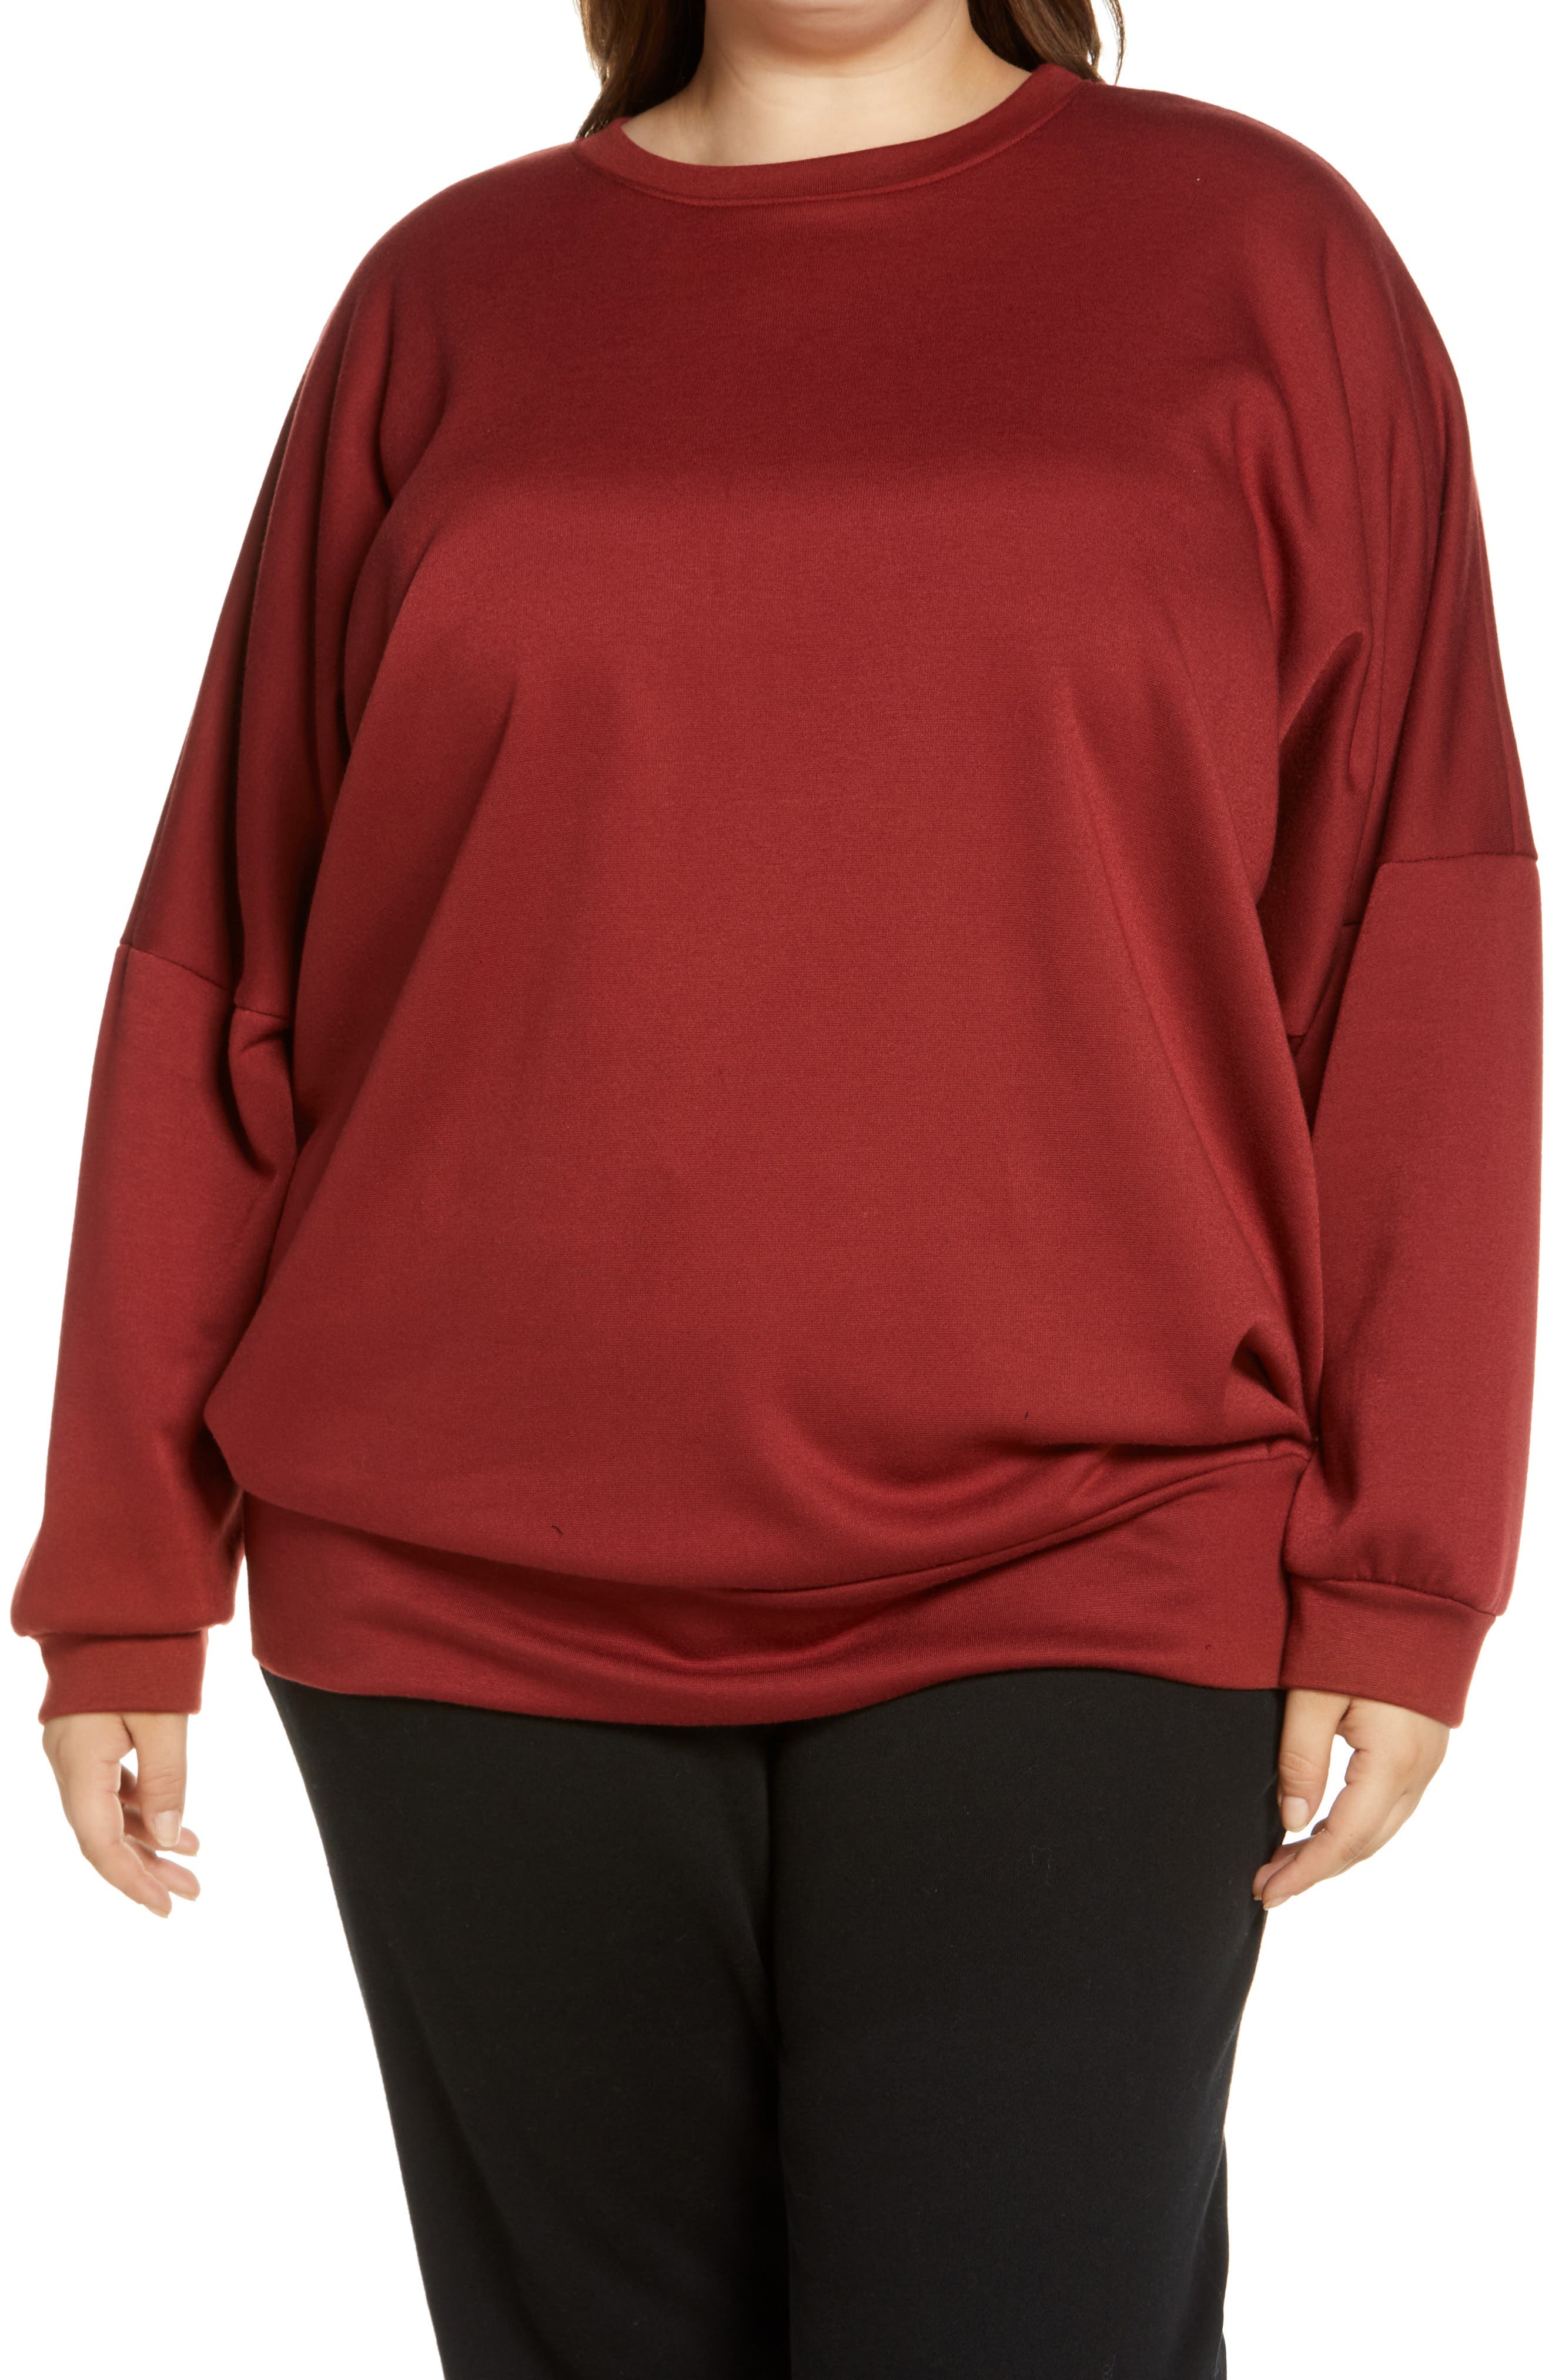 RDHOPE-Women Warm Long-Sleeve Pullover Tunic Tunic Hoodie Sweatshirts